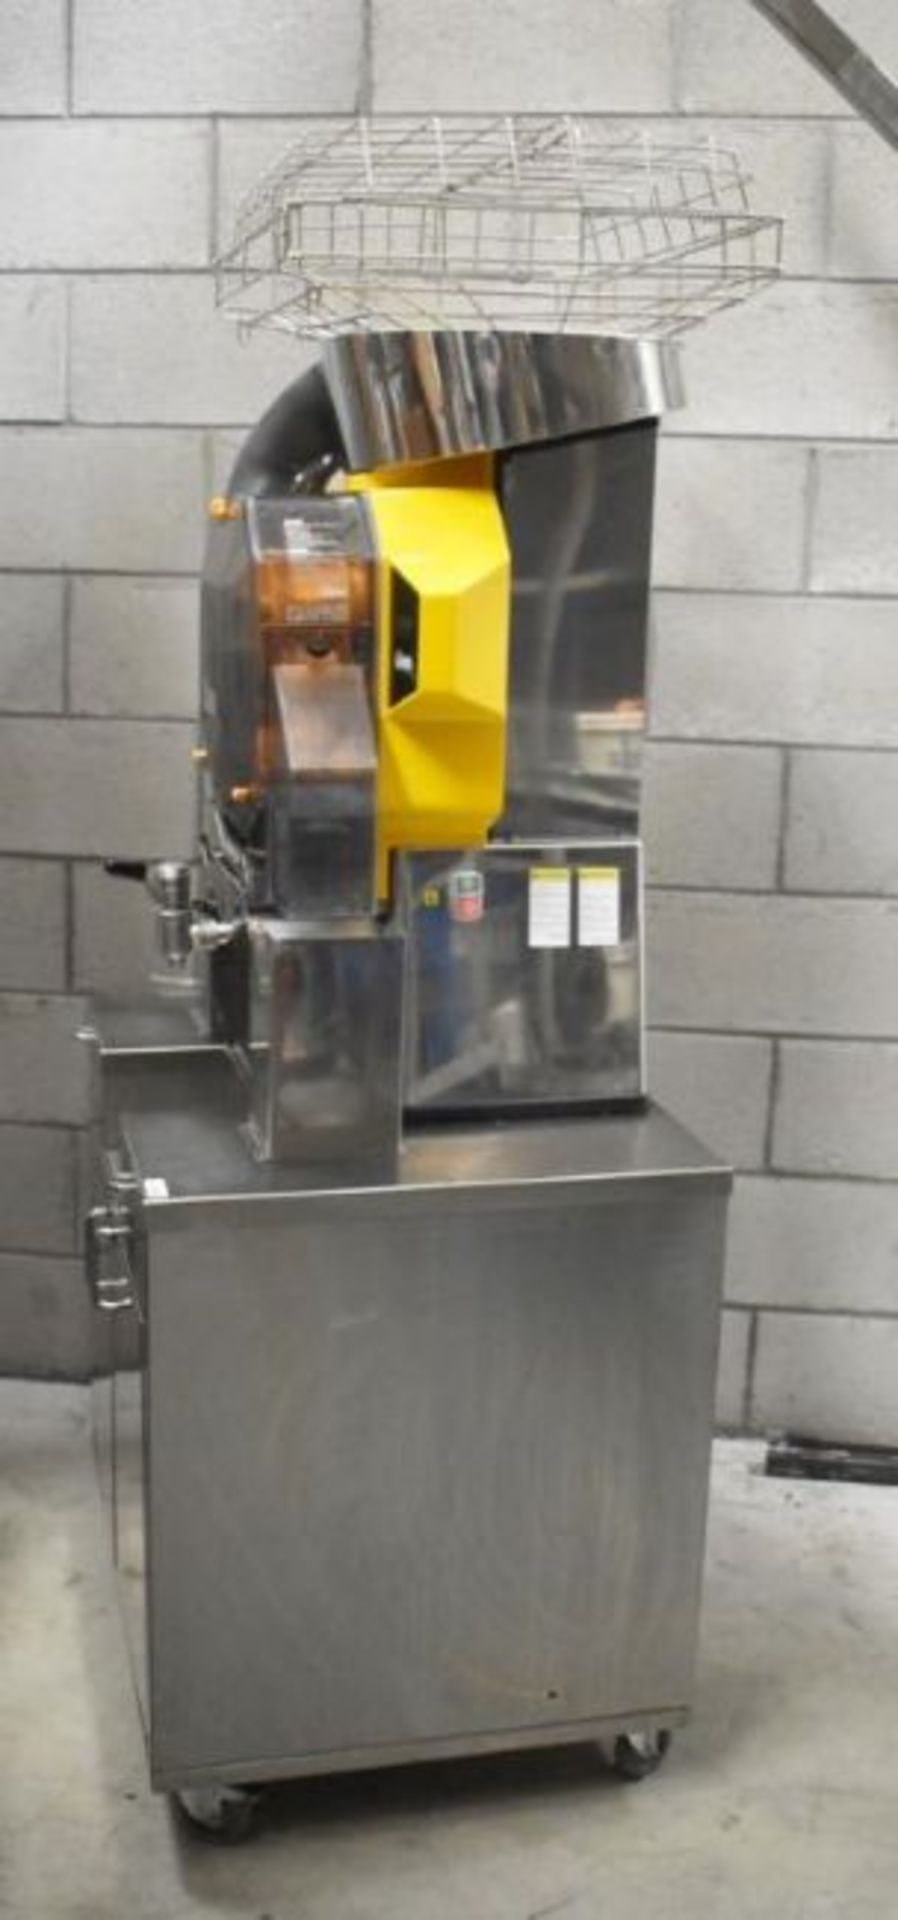 1 x Zumex Speed S +Plus Self-Service Podium Commercial Citrus Juicer - Manufactured in 2018 - Image 15 of 20